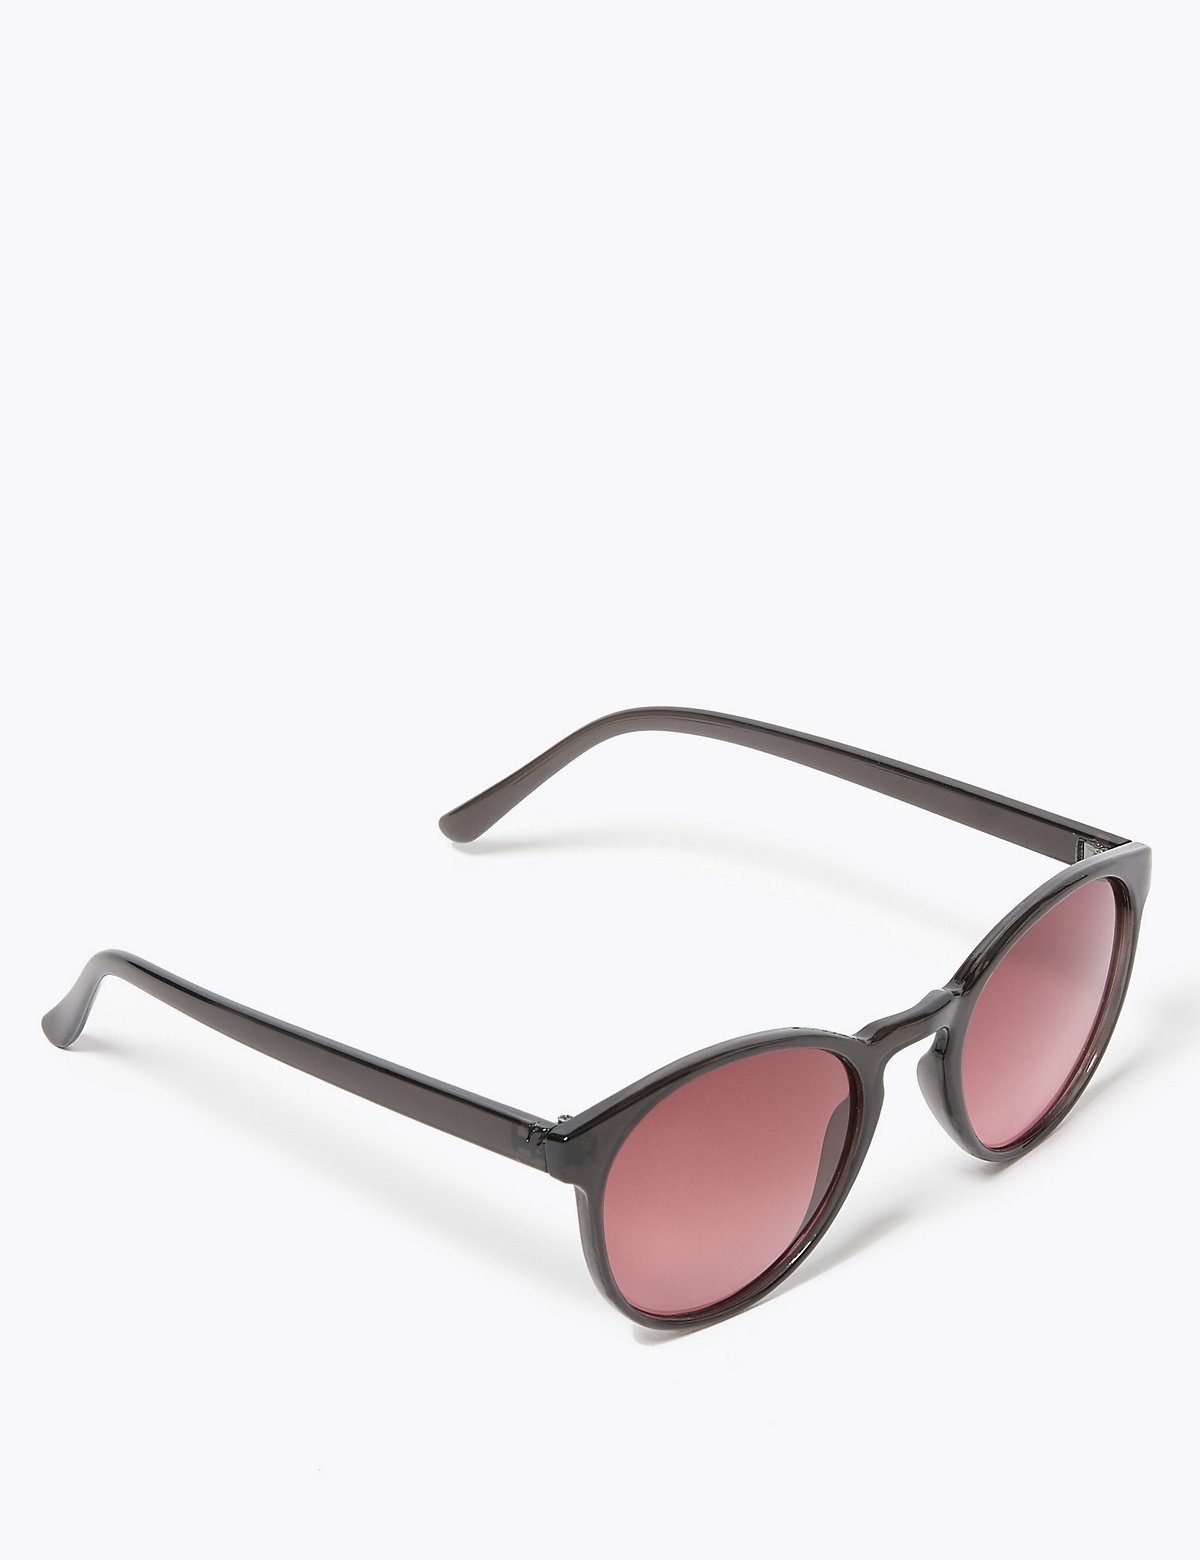 Round Preppy Sunglasses